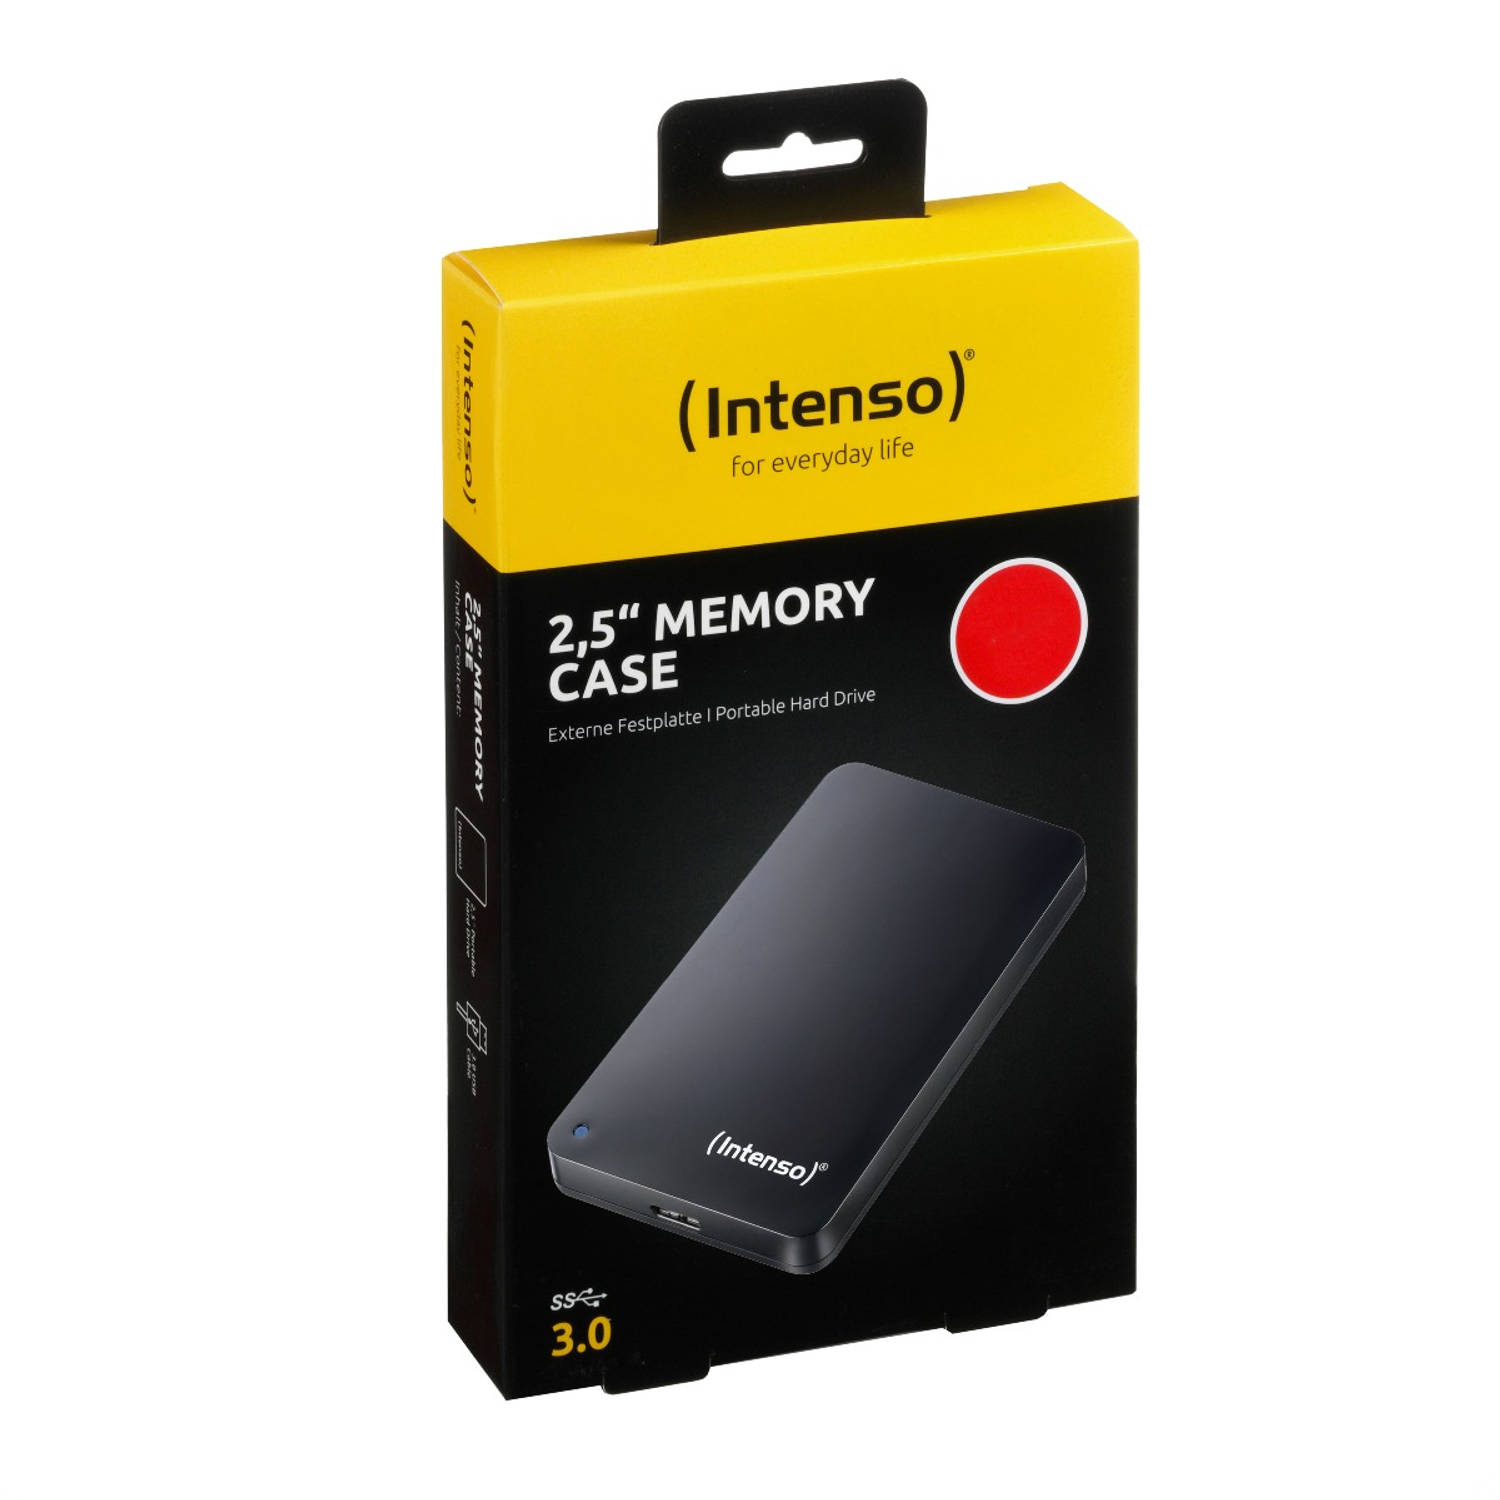 communicatie Horzel Reizende handelaar Intenso 6021530 memory case - Externe harde schijf - USB 3.0 - 2.5 inch -  500GB | Blokker